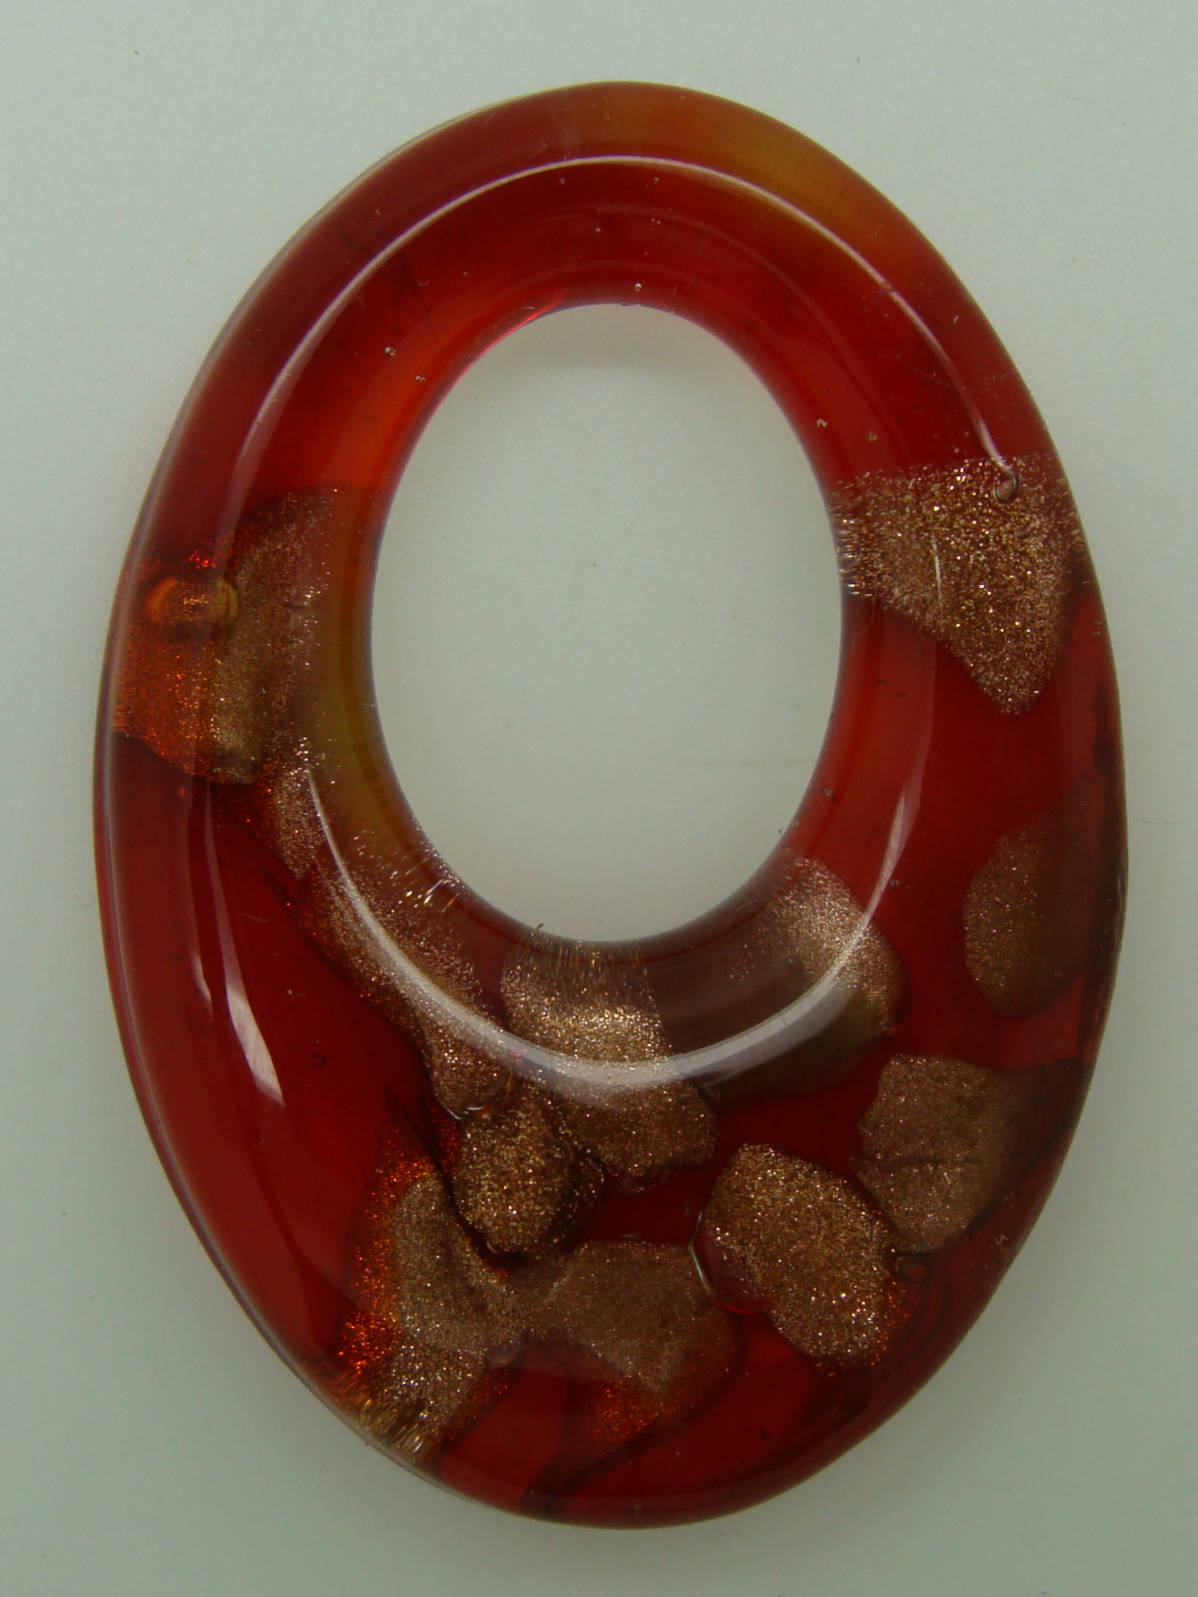 Pend-251-4 pendentif ovale rouge dore verre